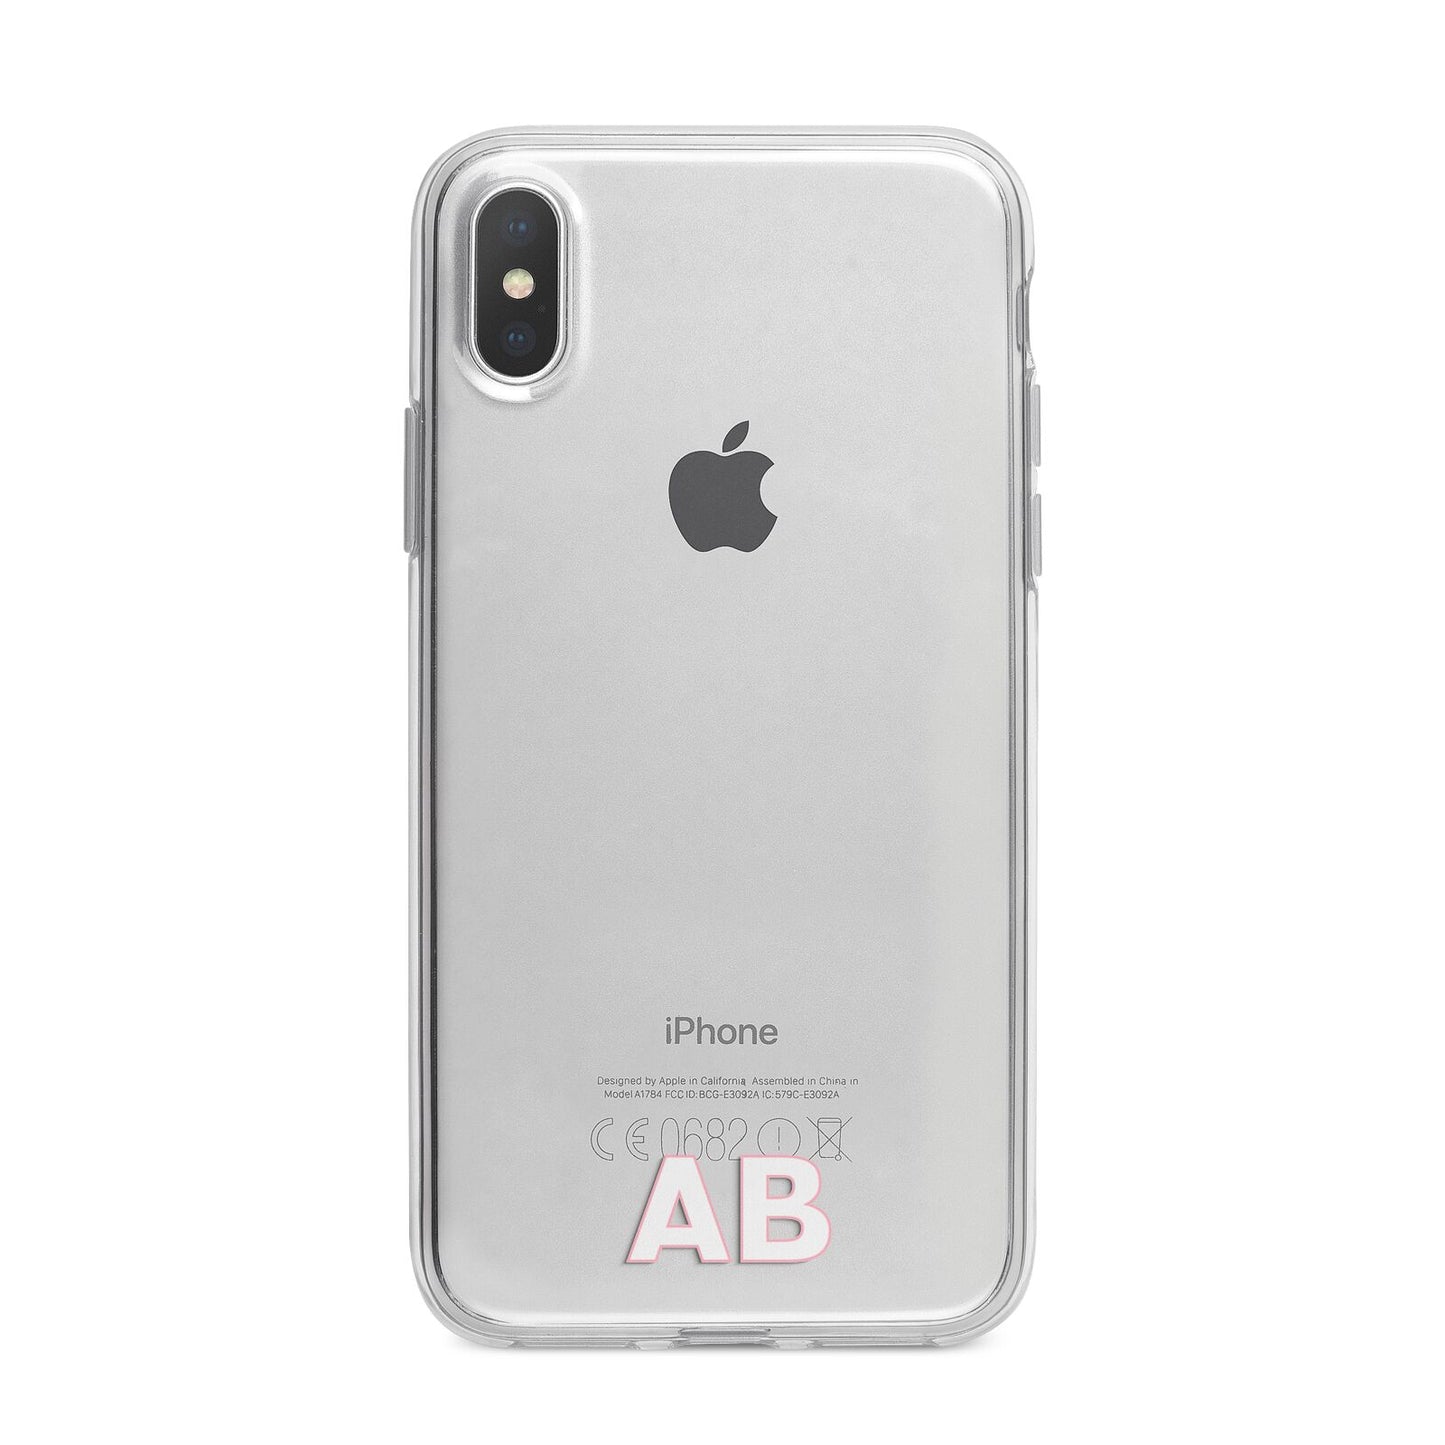 Sans Serif Initials iPhone X Bumper Case on Silver iPhone Alternative Image 1